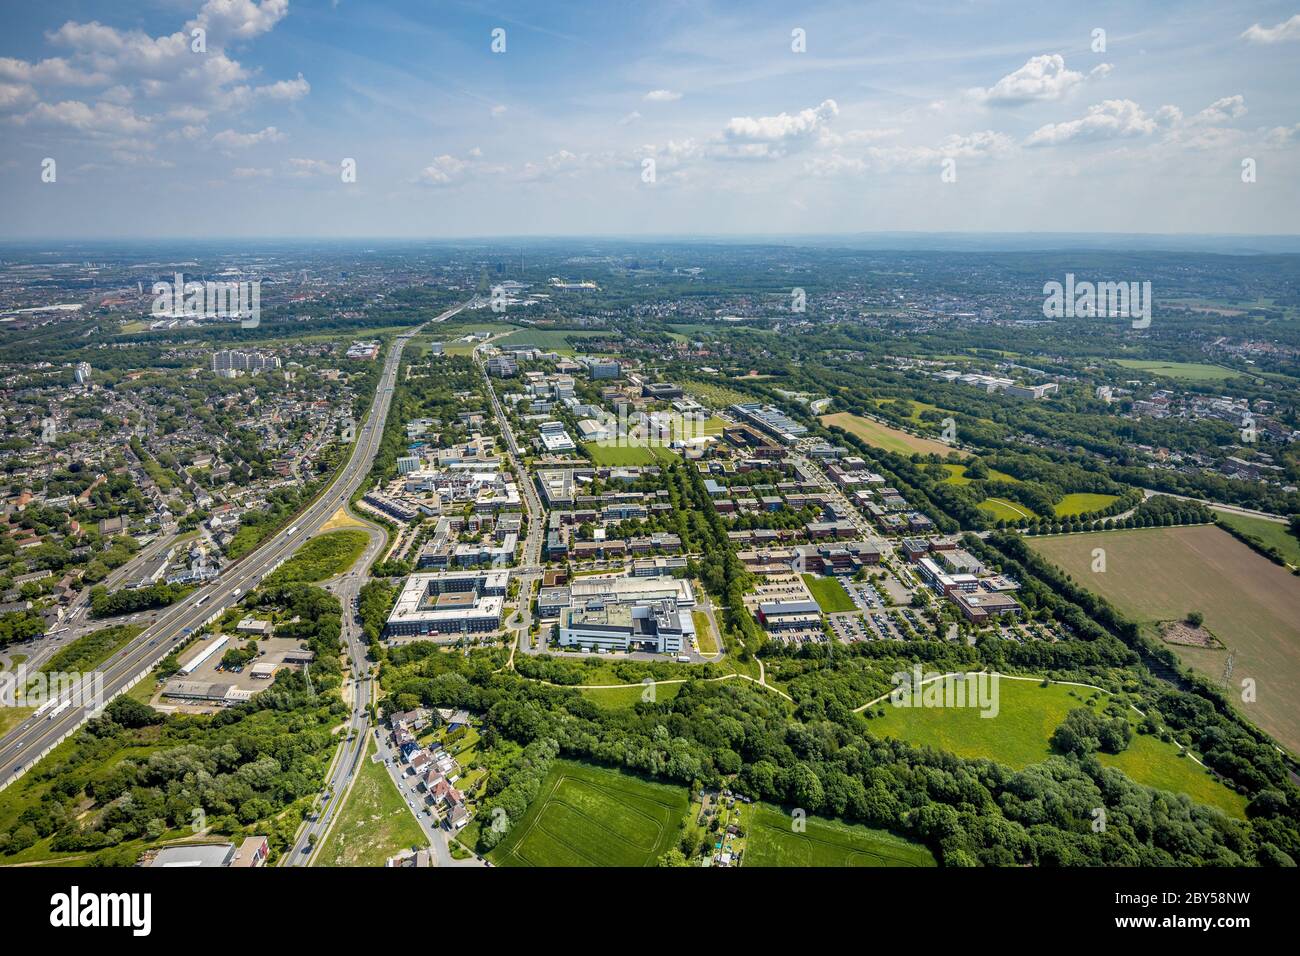 technologie centre Dortmund and TU Dortmund, 10.04.2020, aerial view, Germany, North Rhine-Westphalia, Ruhr Area, Dortmund Stock Photo